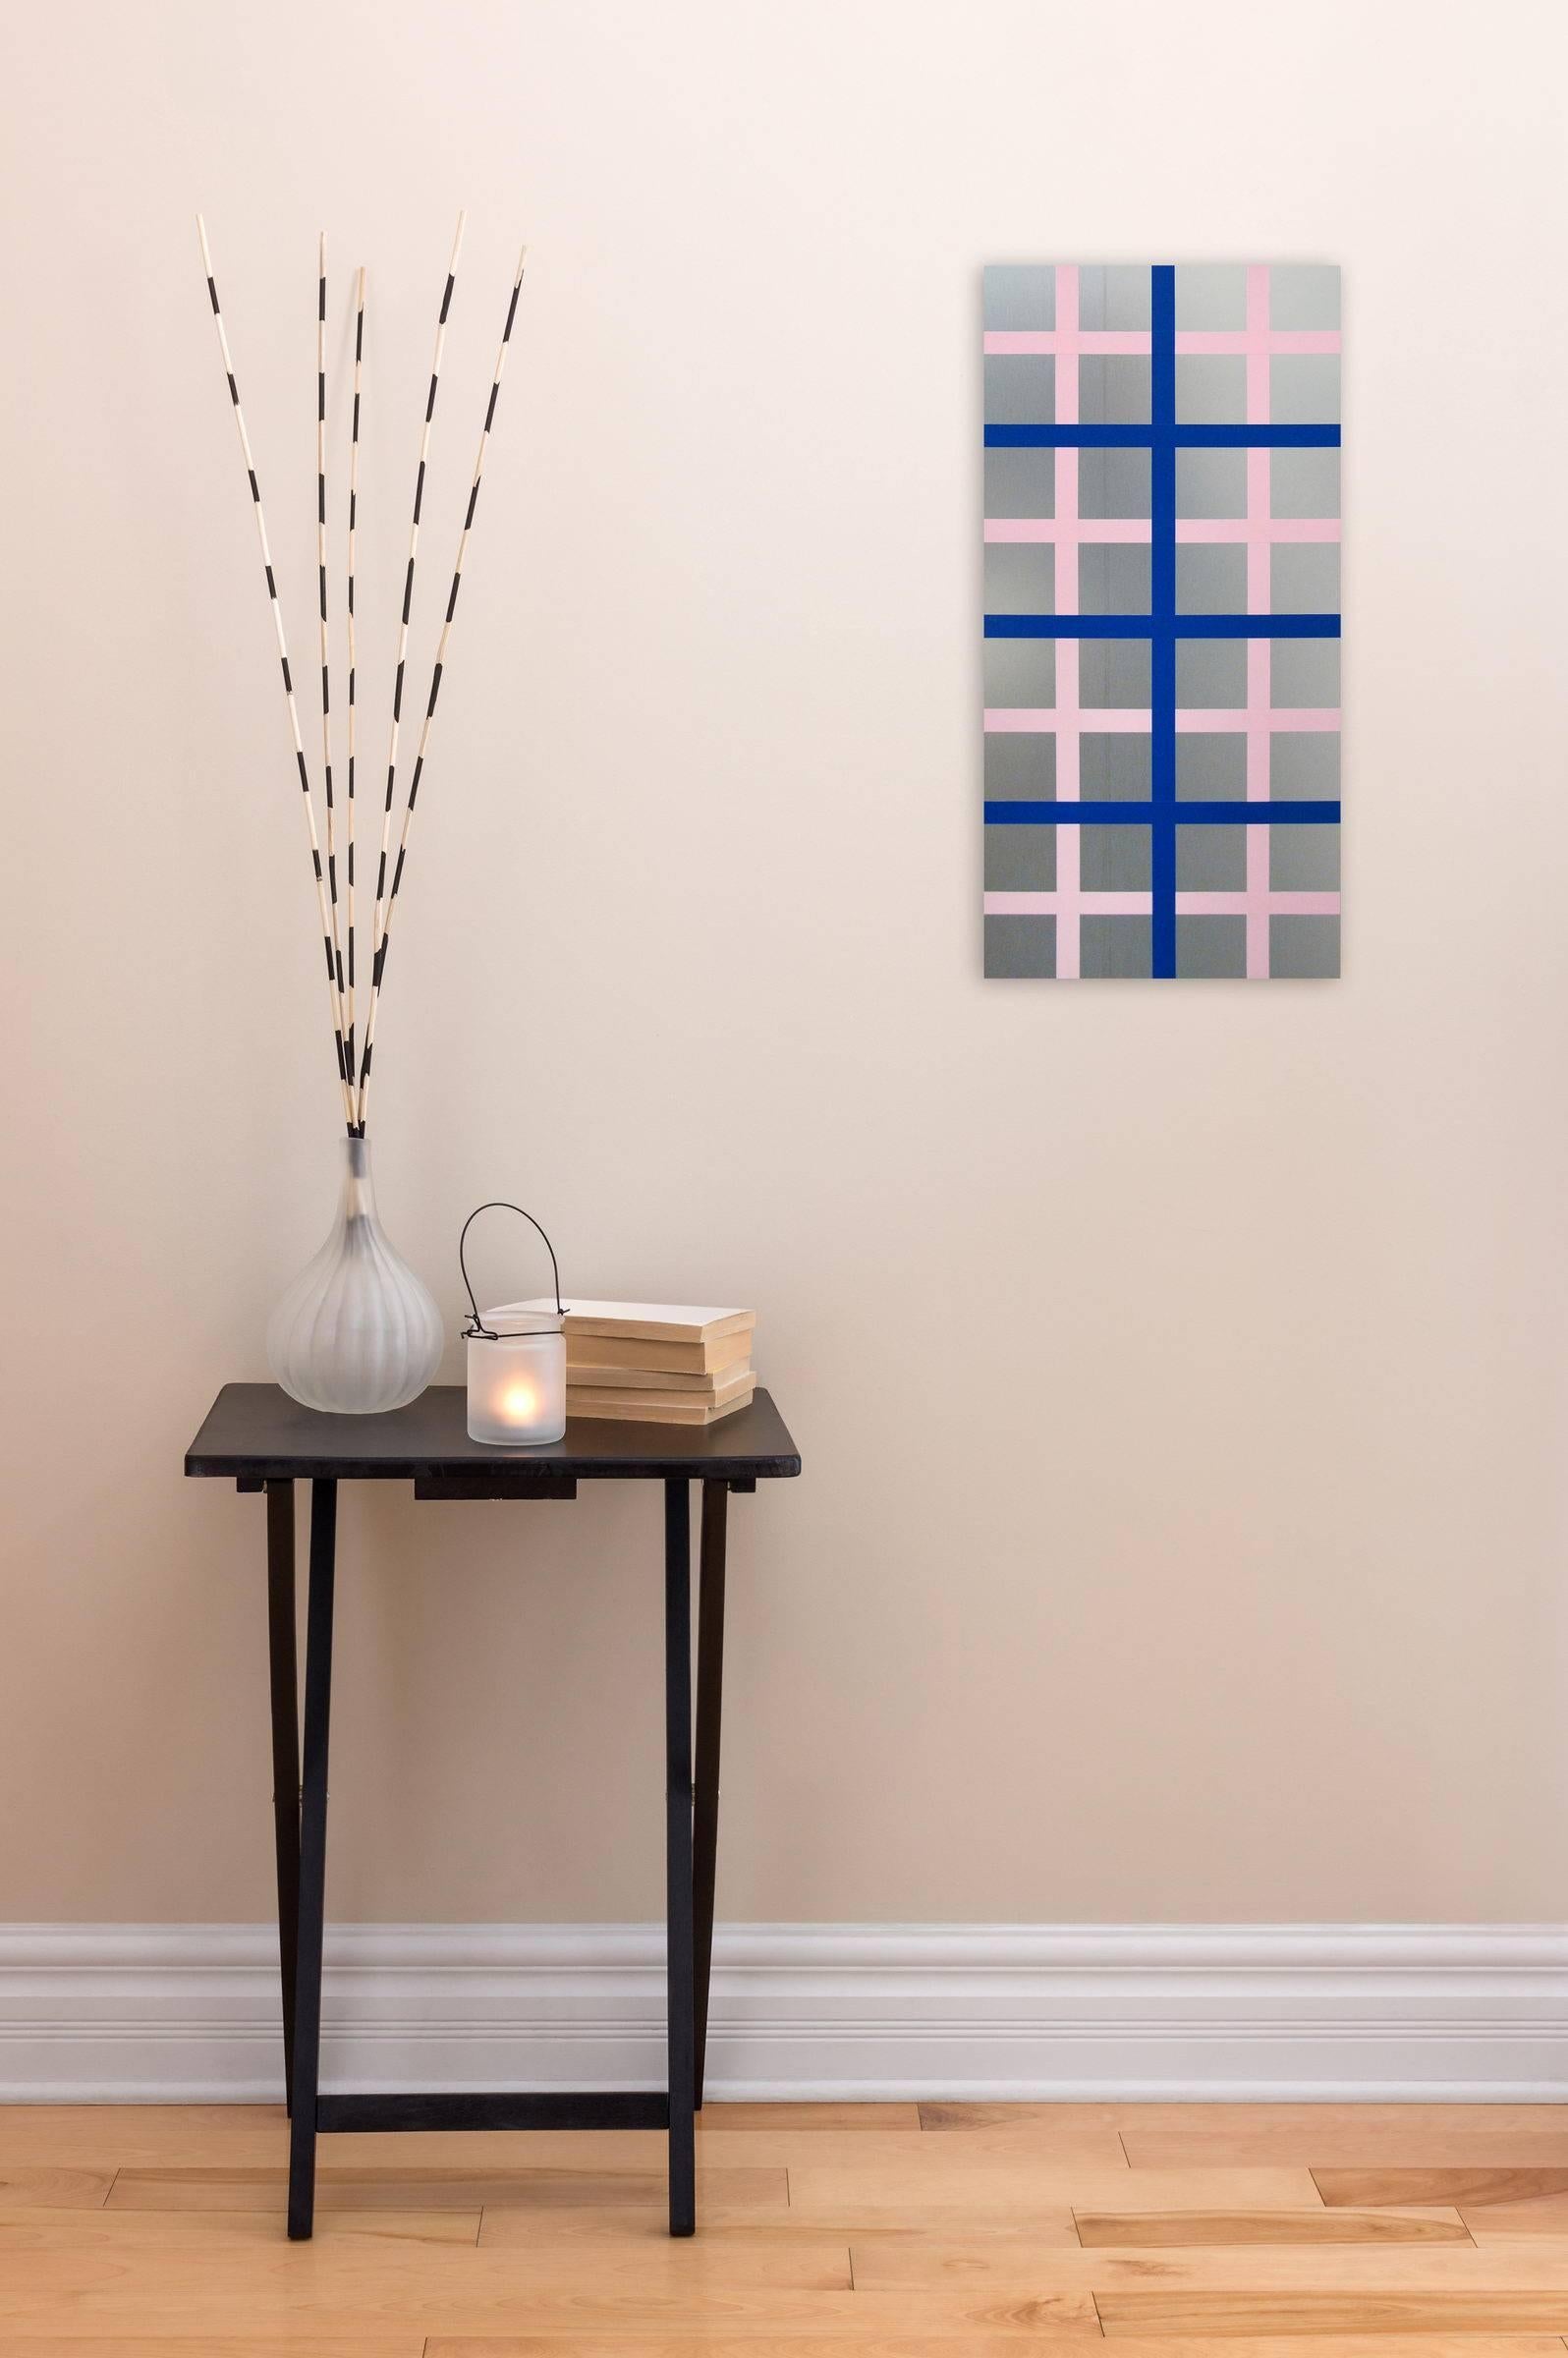 Double grid 4, 2016 - Painting by Daniel Göttin